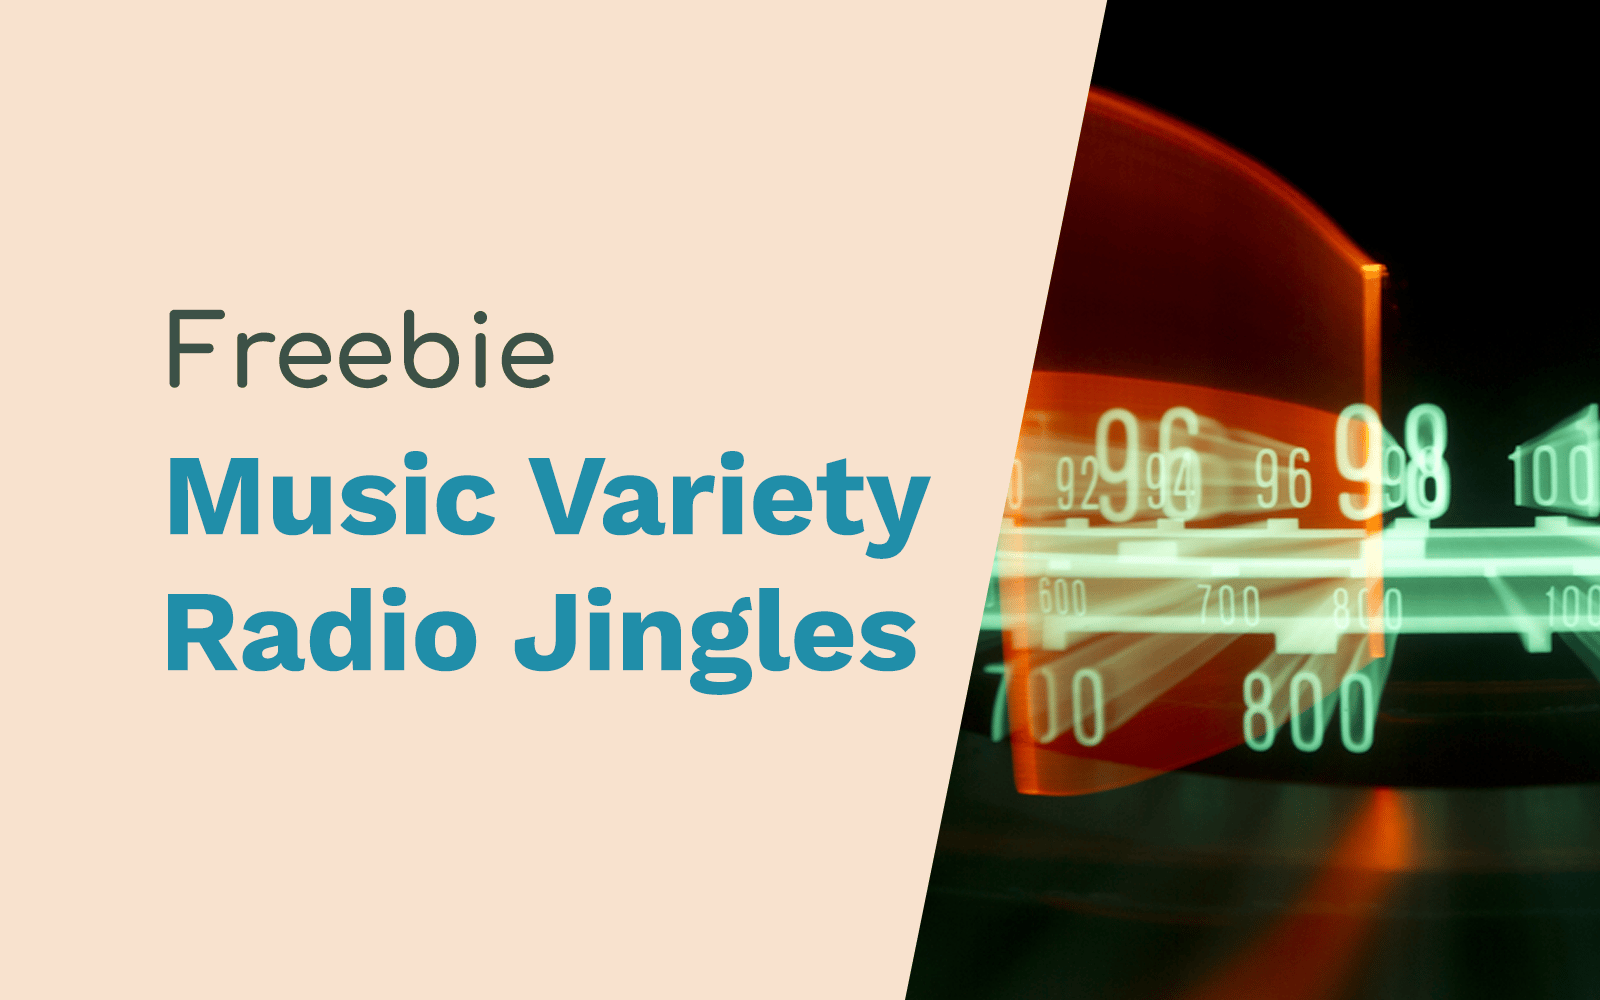 Free Radio Jingles: The Best Music Variety Free Jingles free radio jingles Music Radio Creative